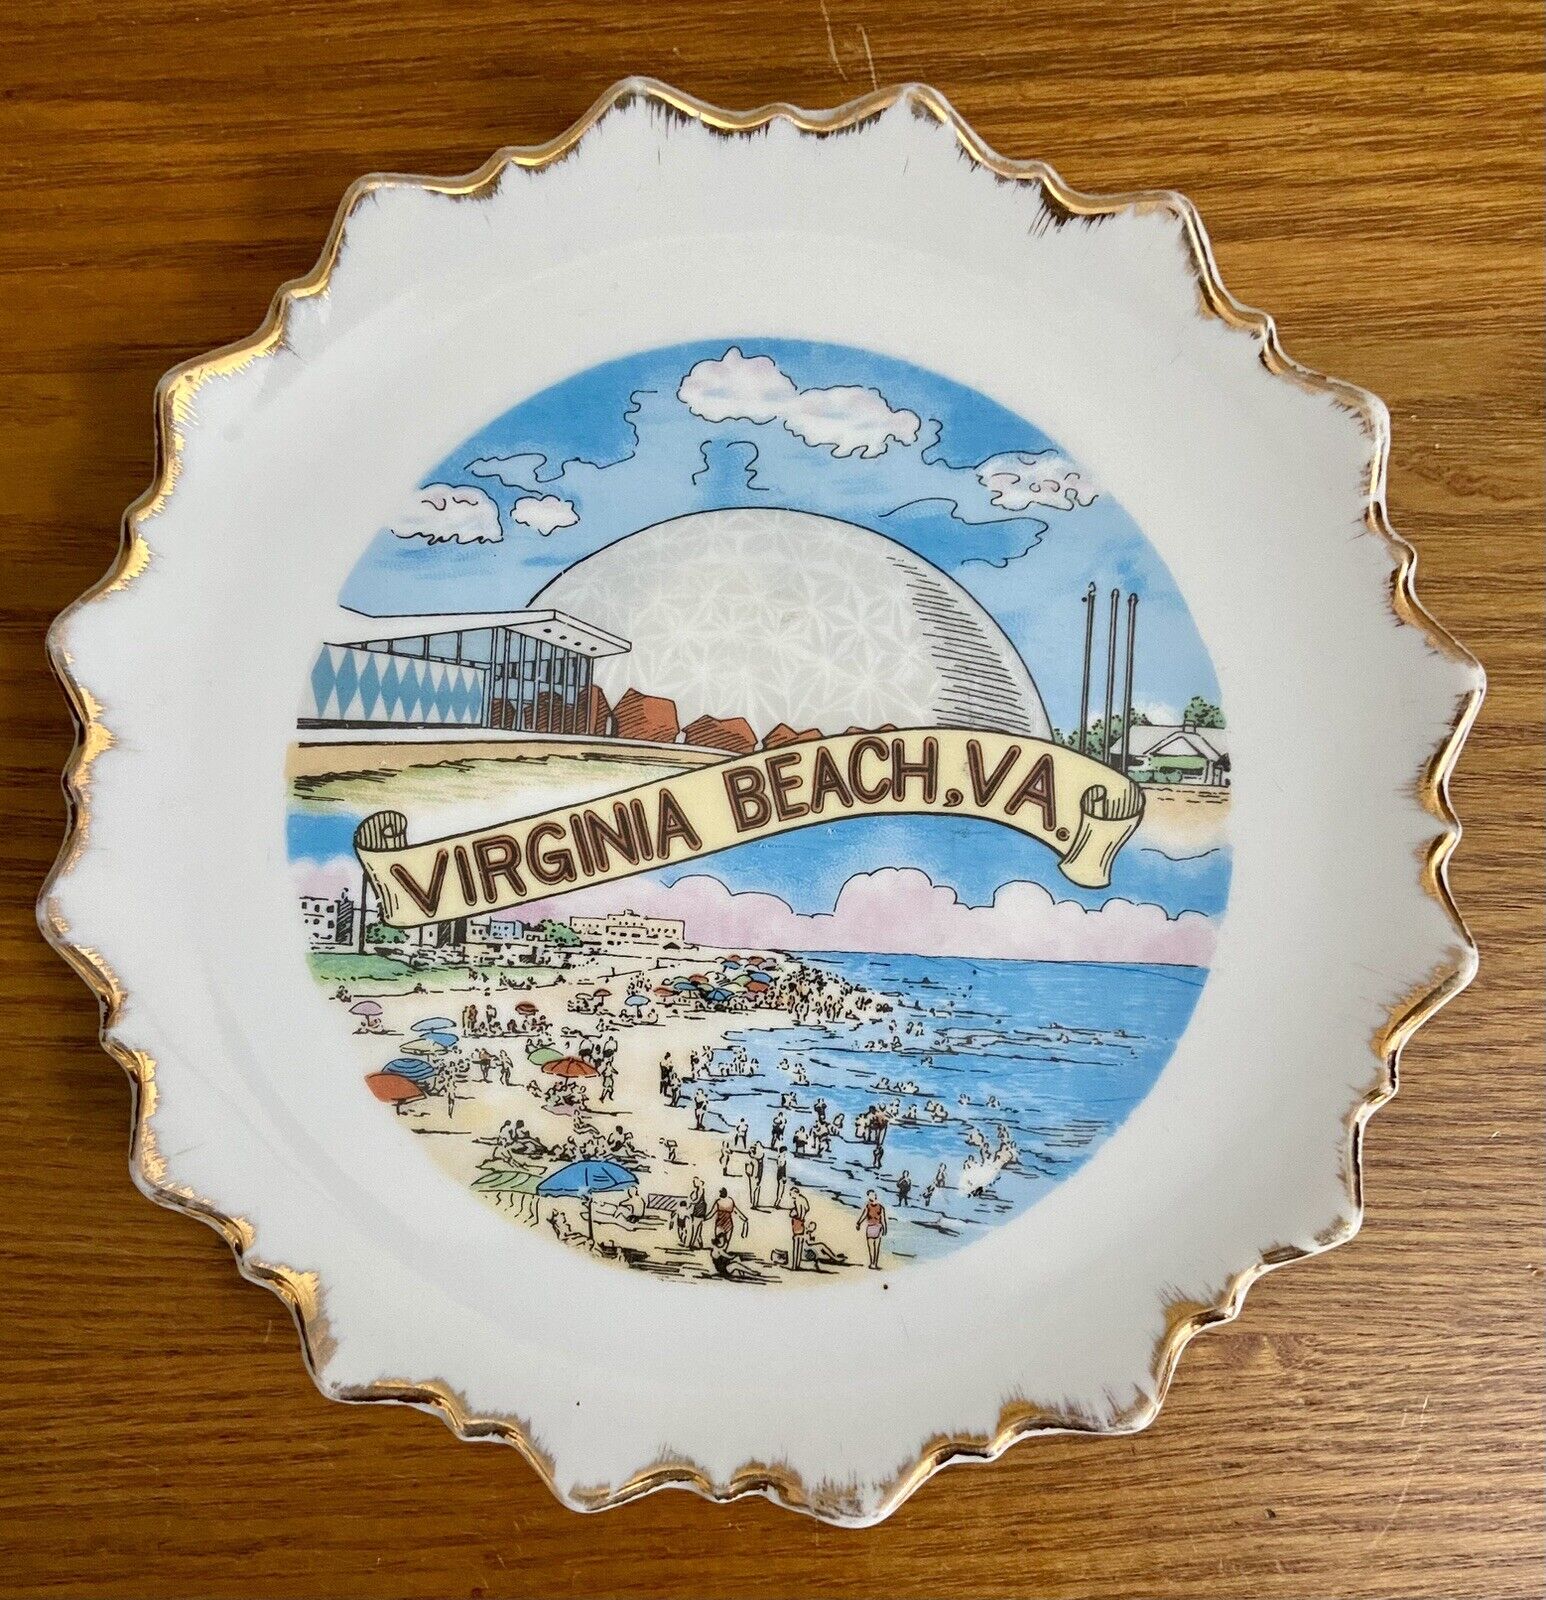 Vintage Collector 7“ Plate Virginia Beach, VA  Popular Landmarks Dome Gold Edged